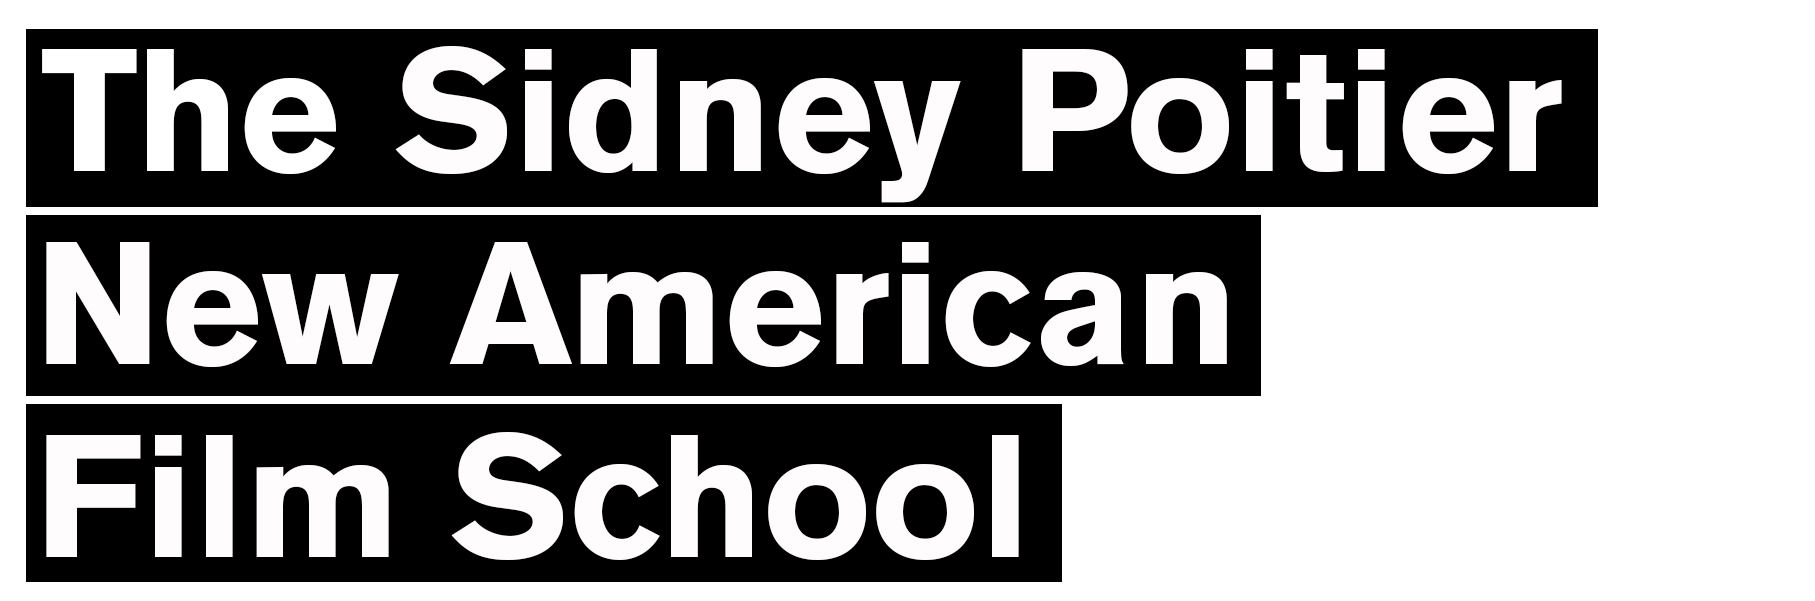 The Sidney Poitier New American Film School